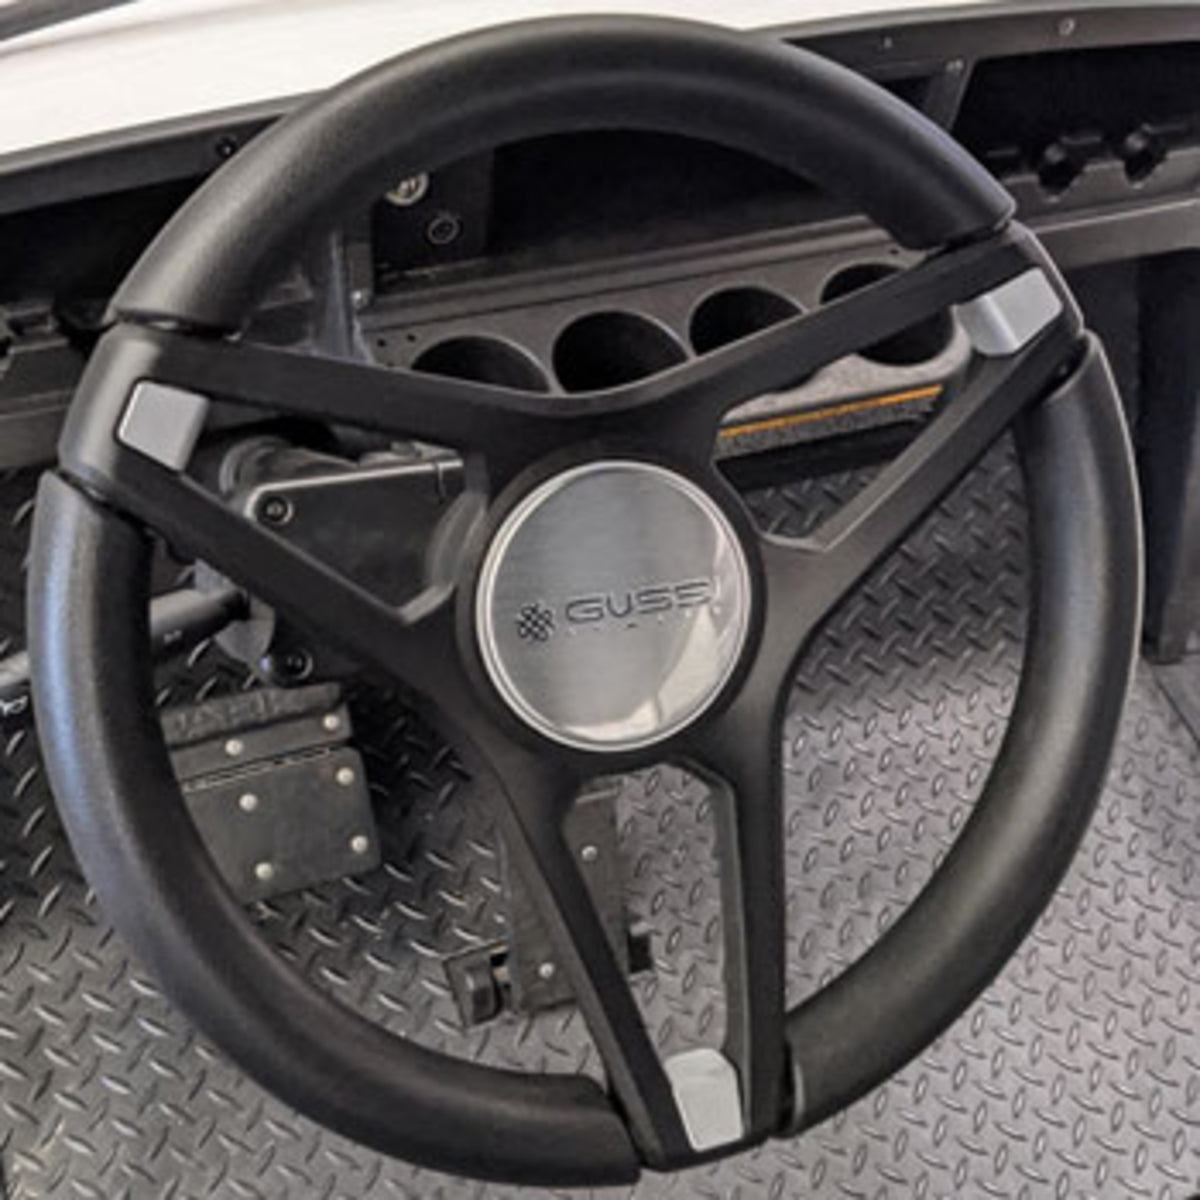 EZGO Gussi Molino Black Steering Wheel